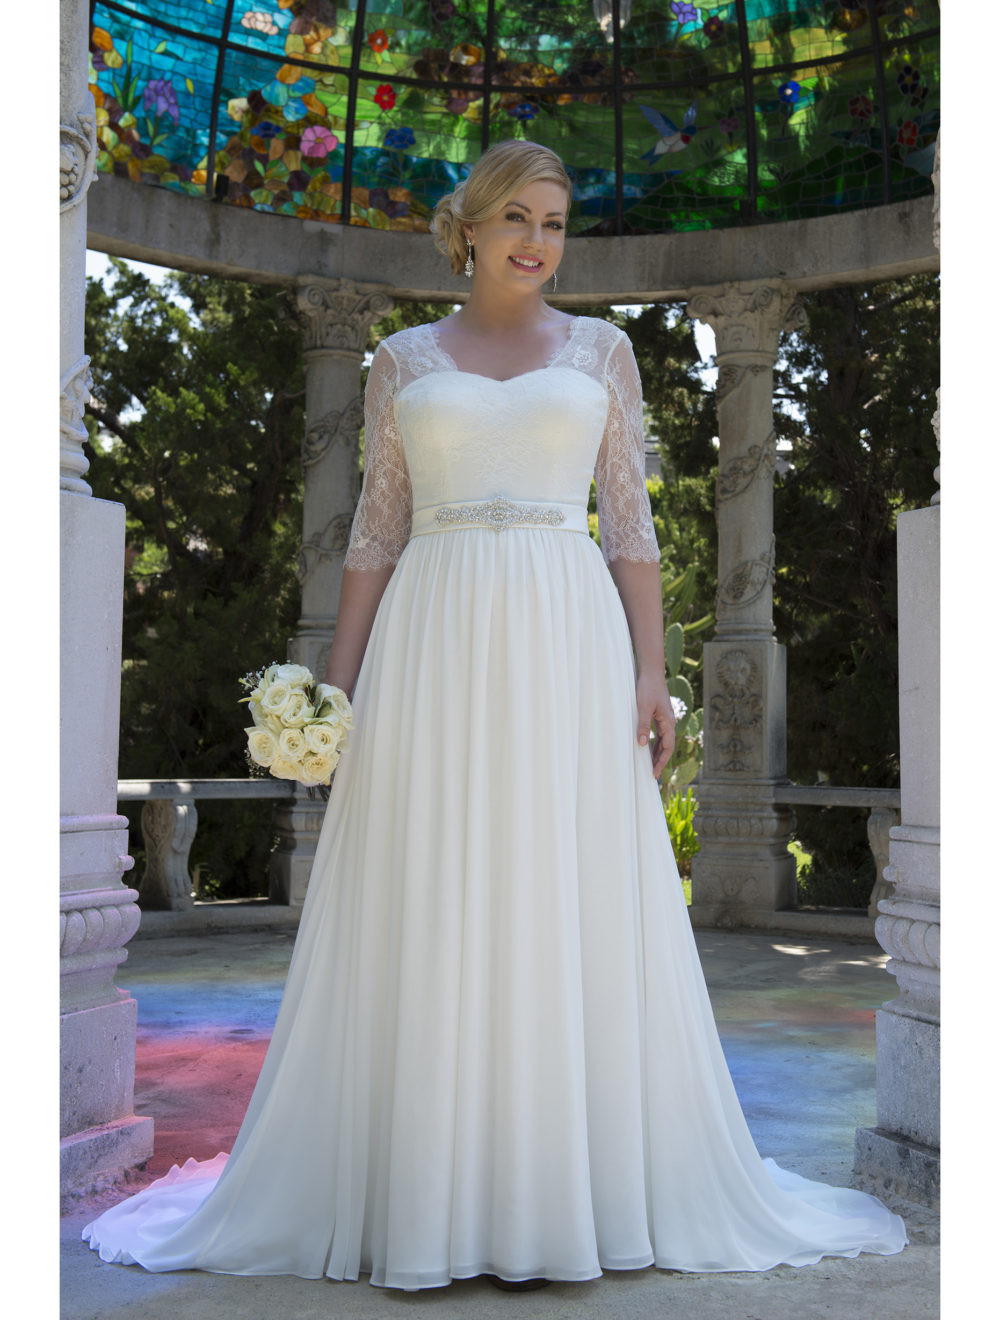 Plus Size Casual Wedding Dresses
 Informal Lace Chiffon Modest Plus Size Wedding Dresses